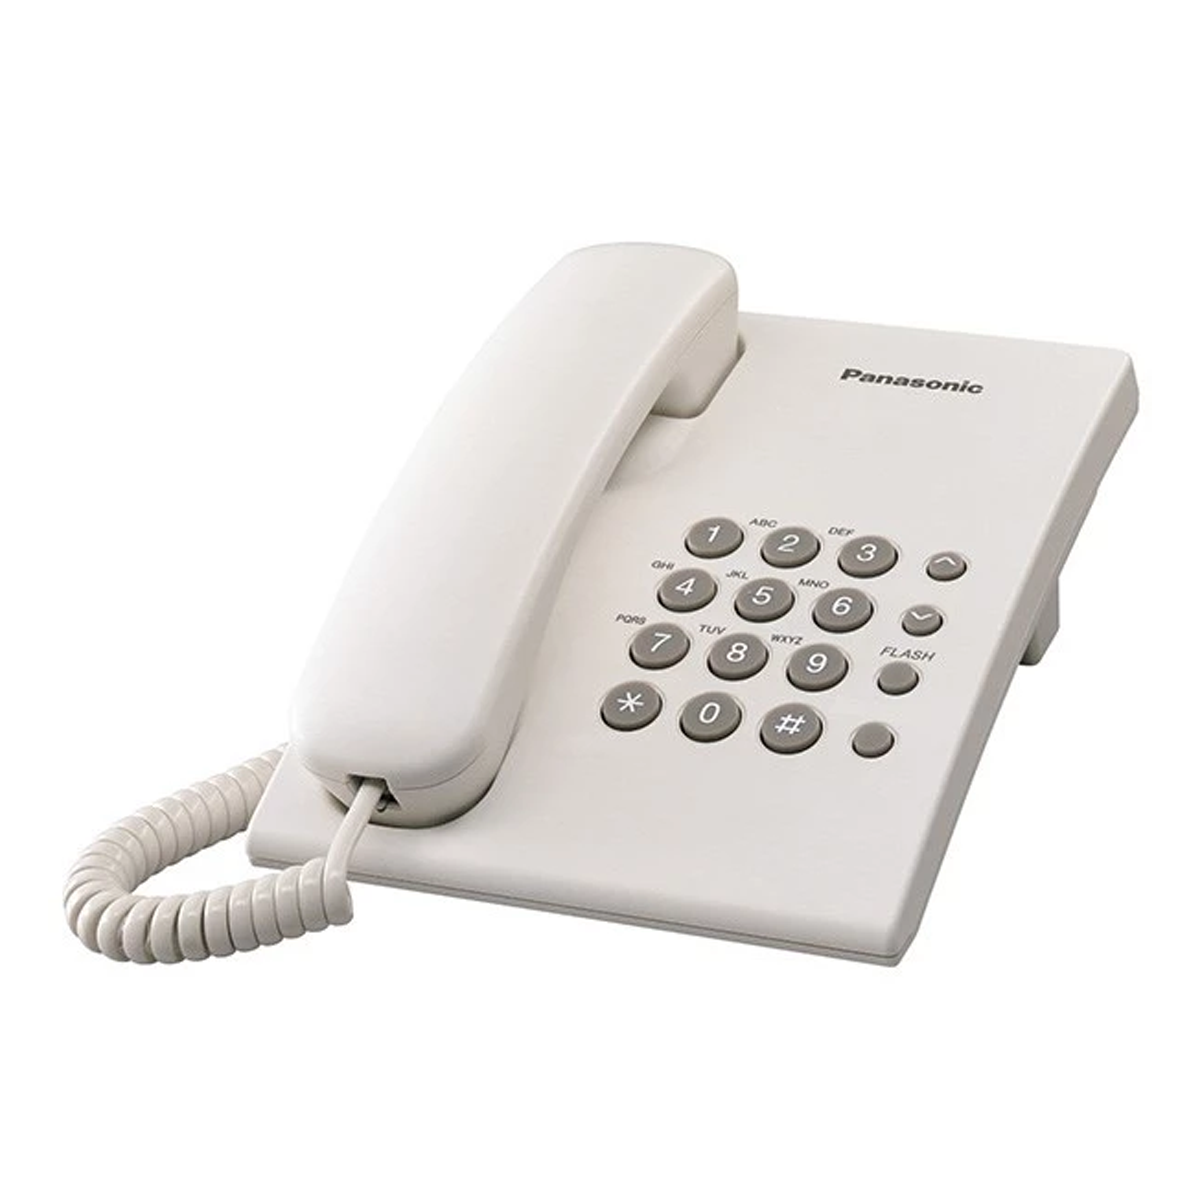  تلفن رومیزی پاناسونیک مدل KX-TS500MX-سفید